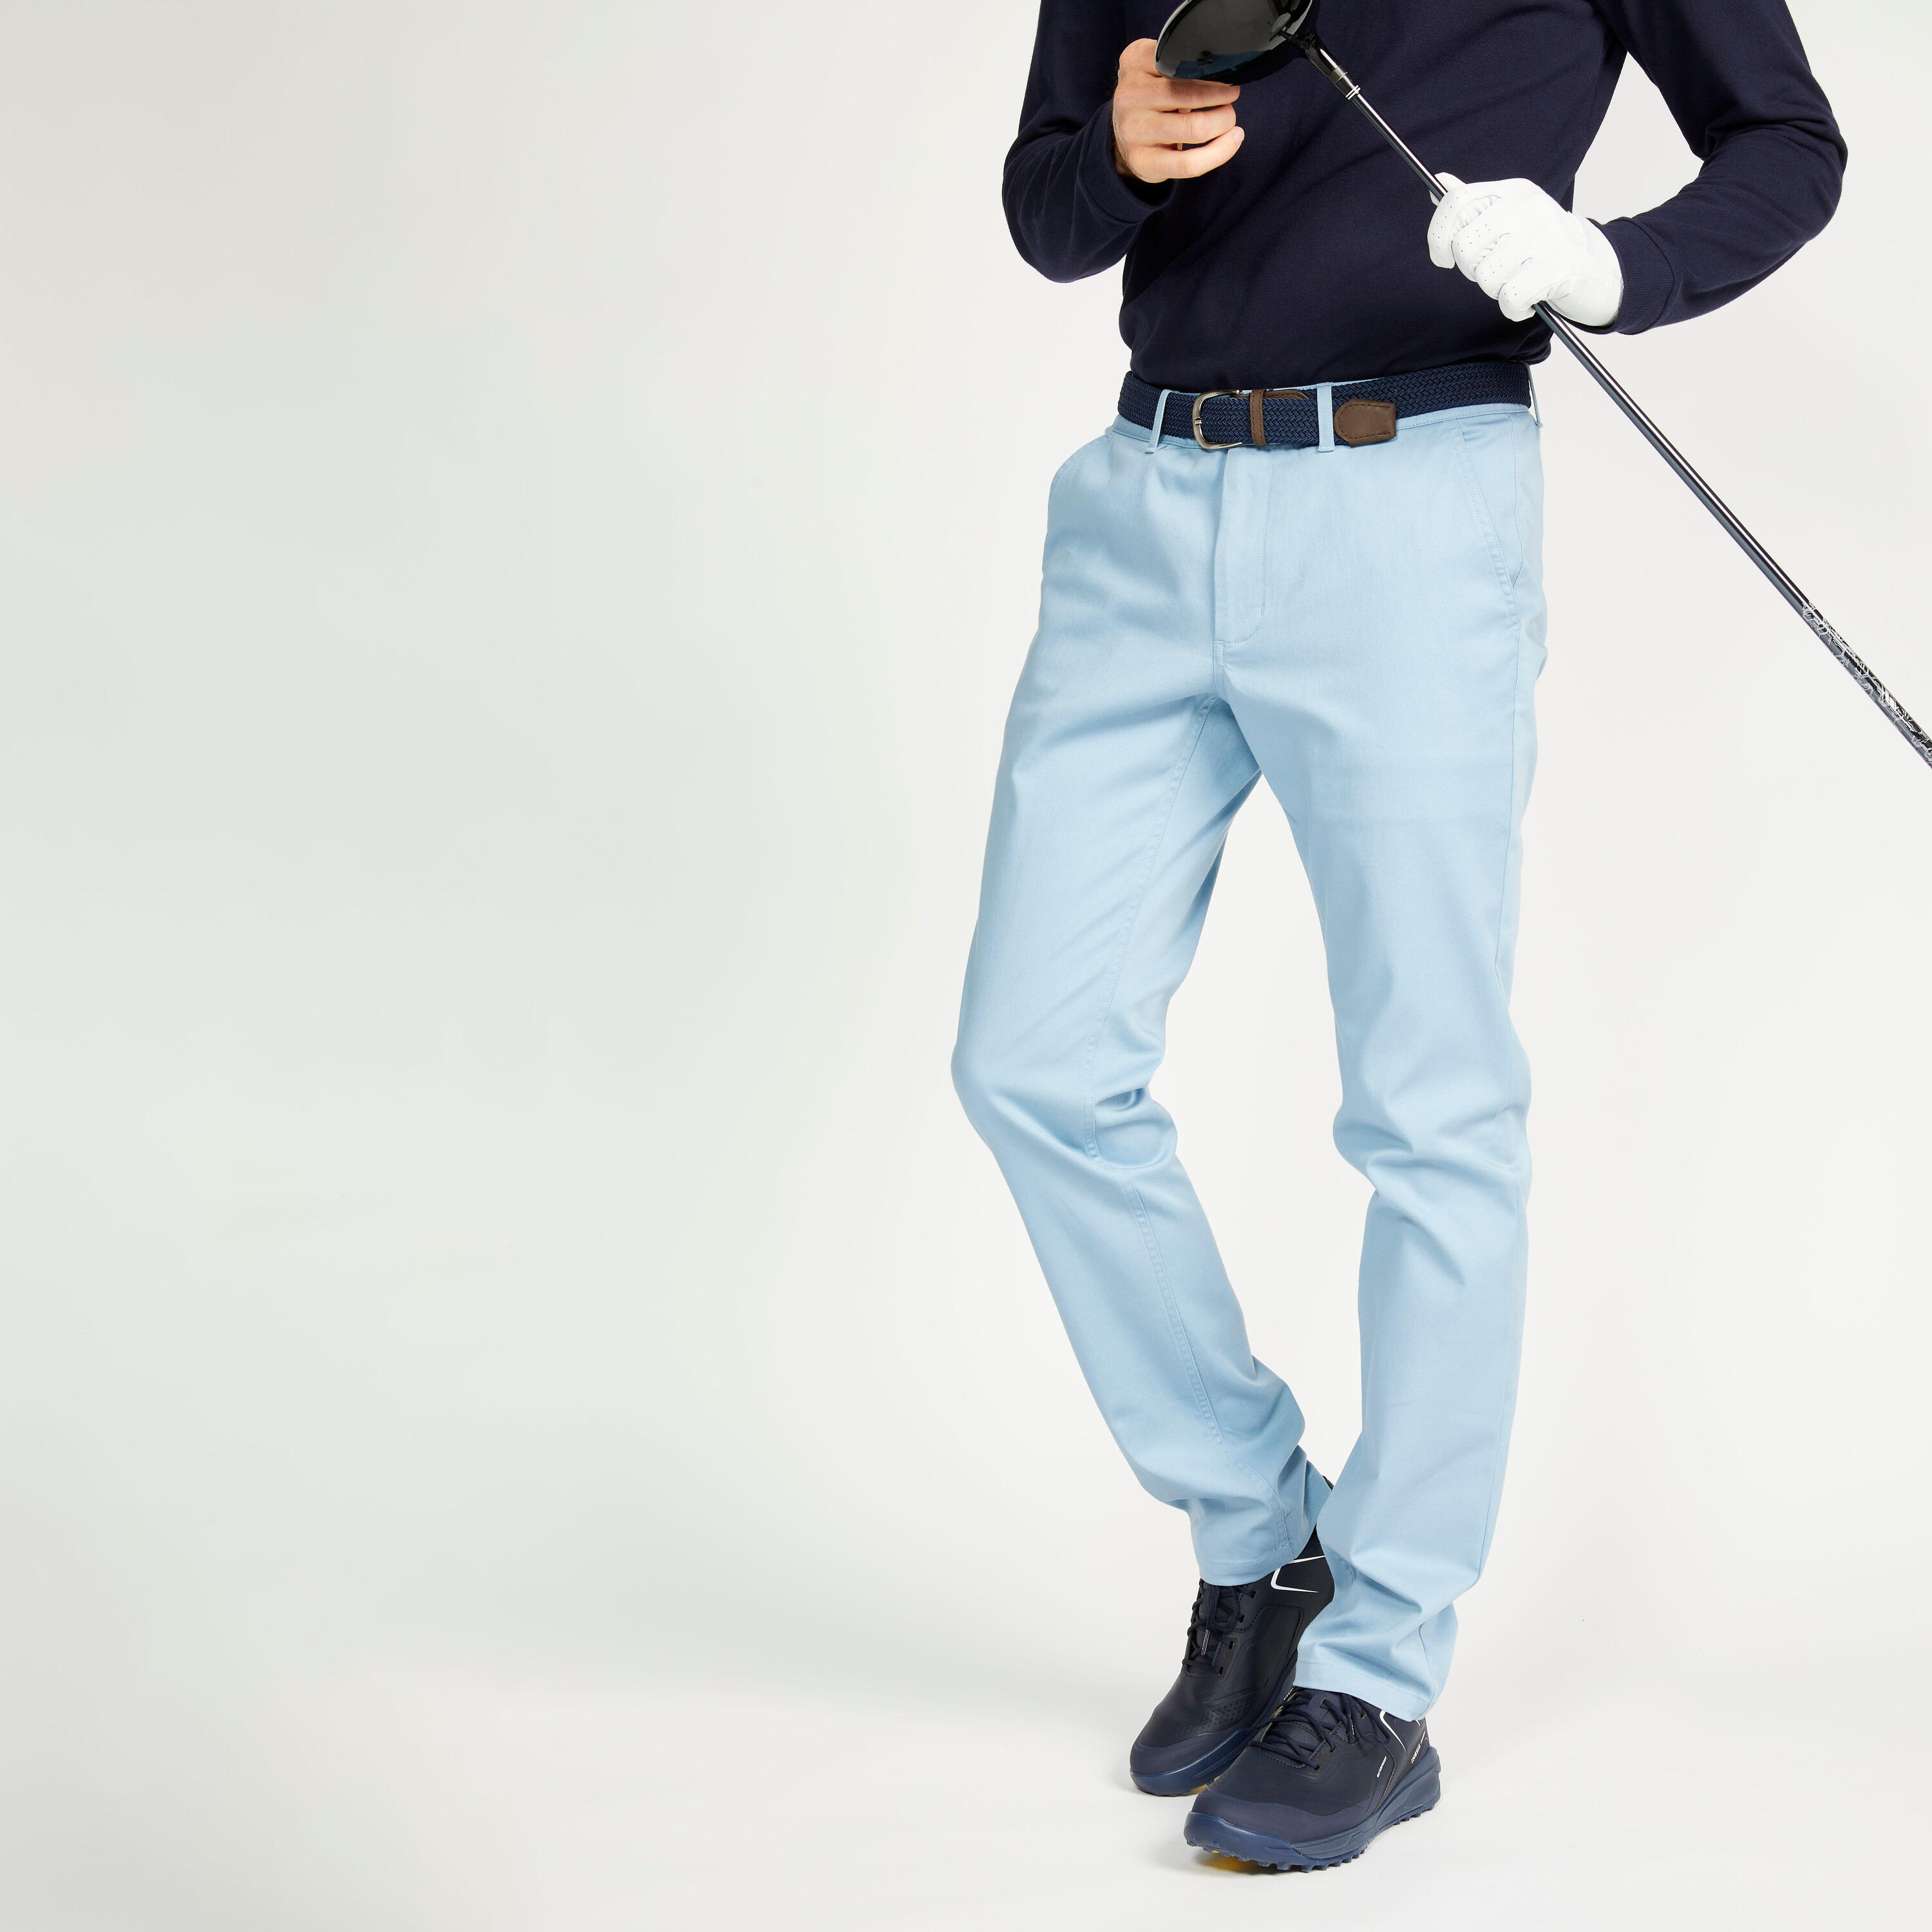 INESIS Men's golf trousers - MW500 denim blue